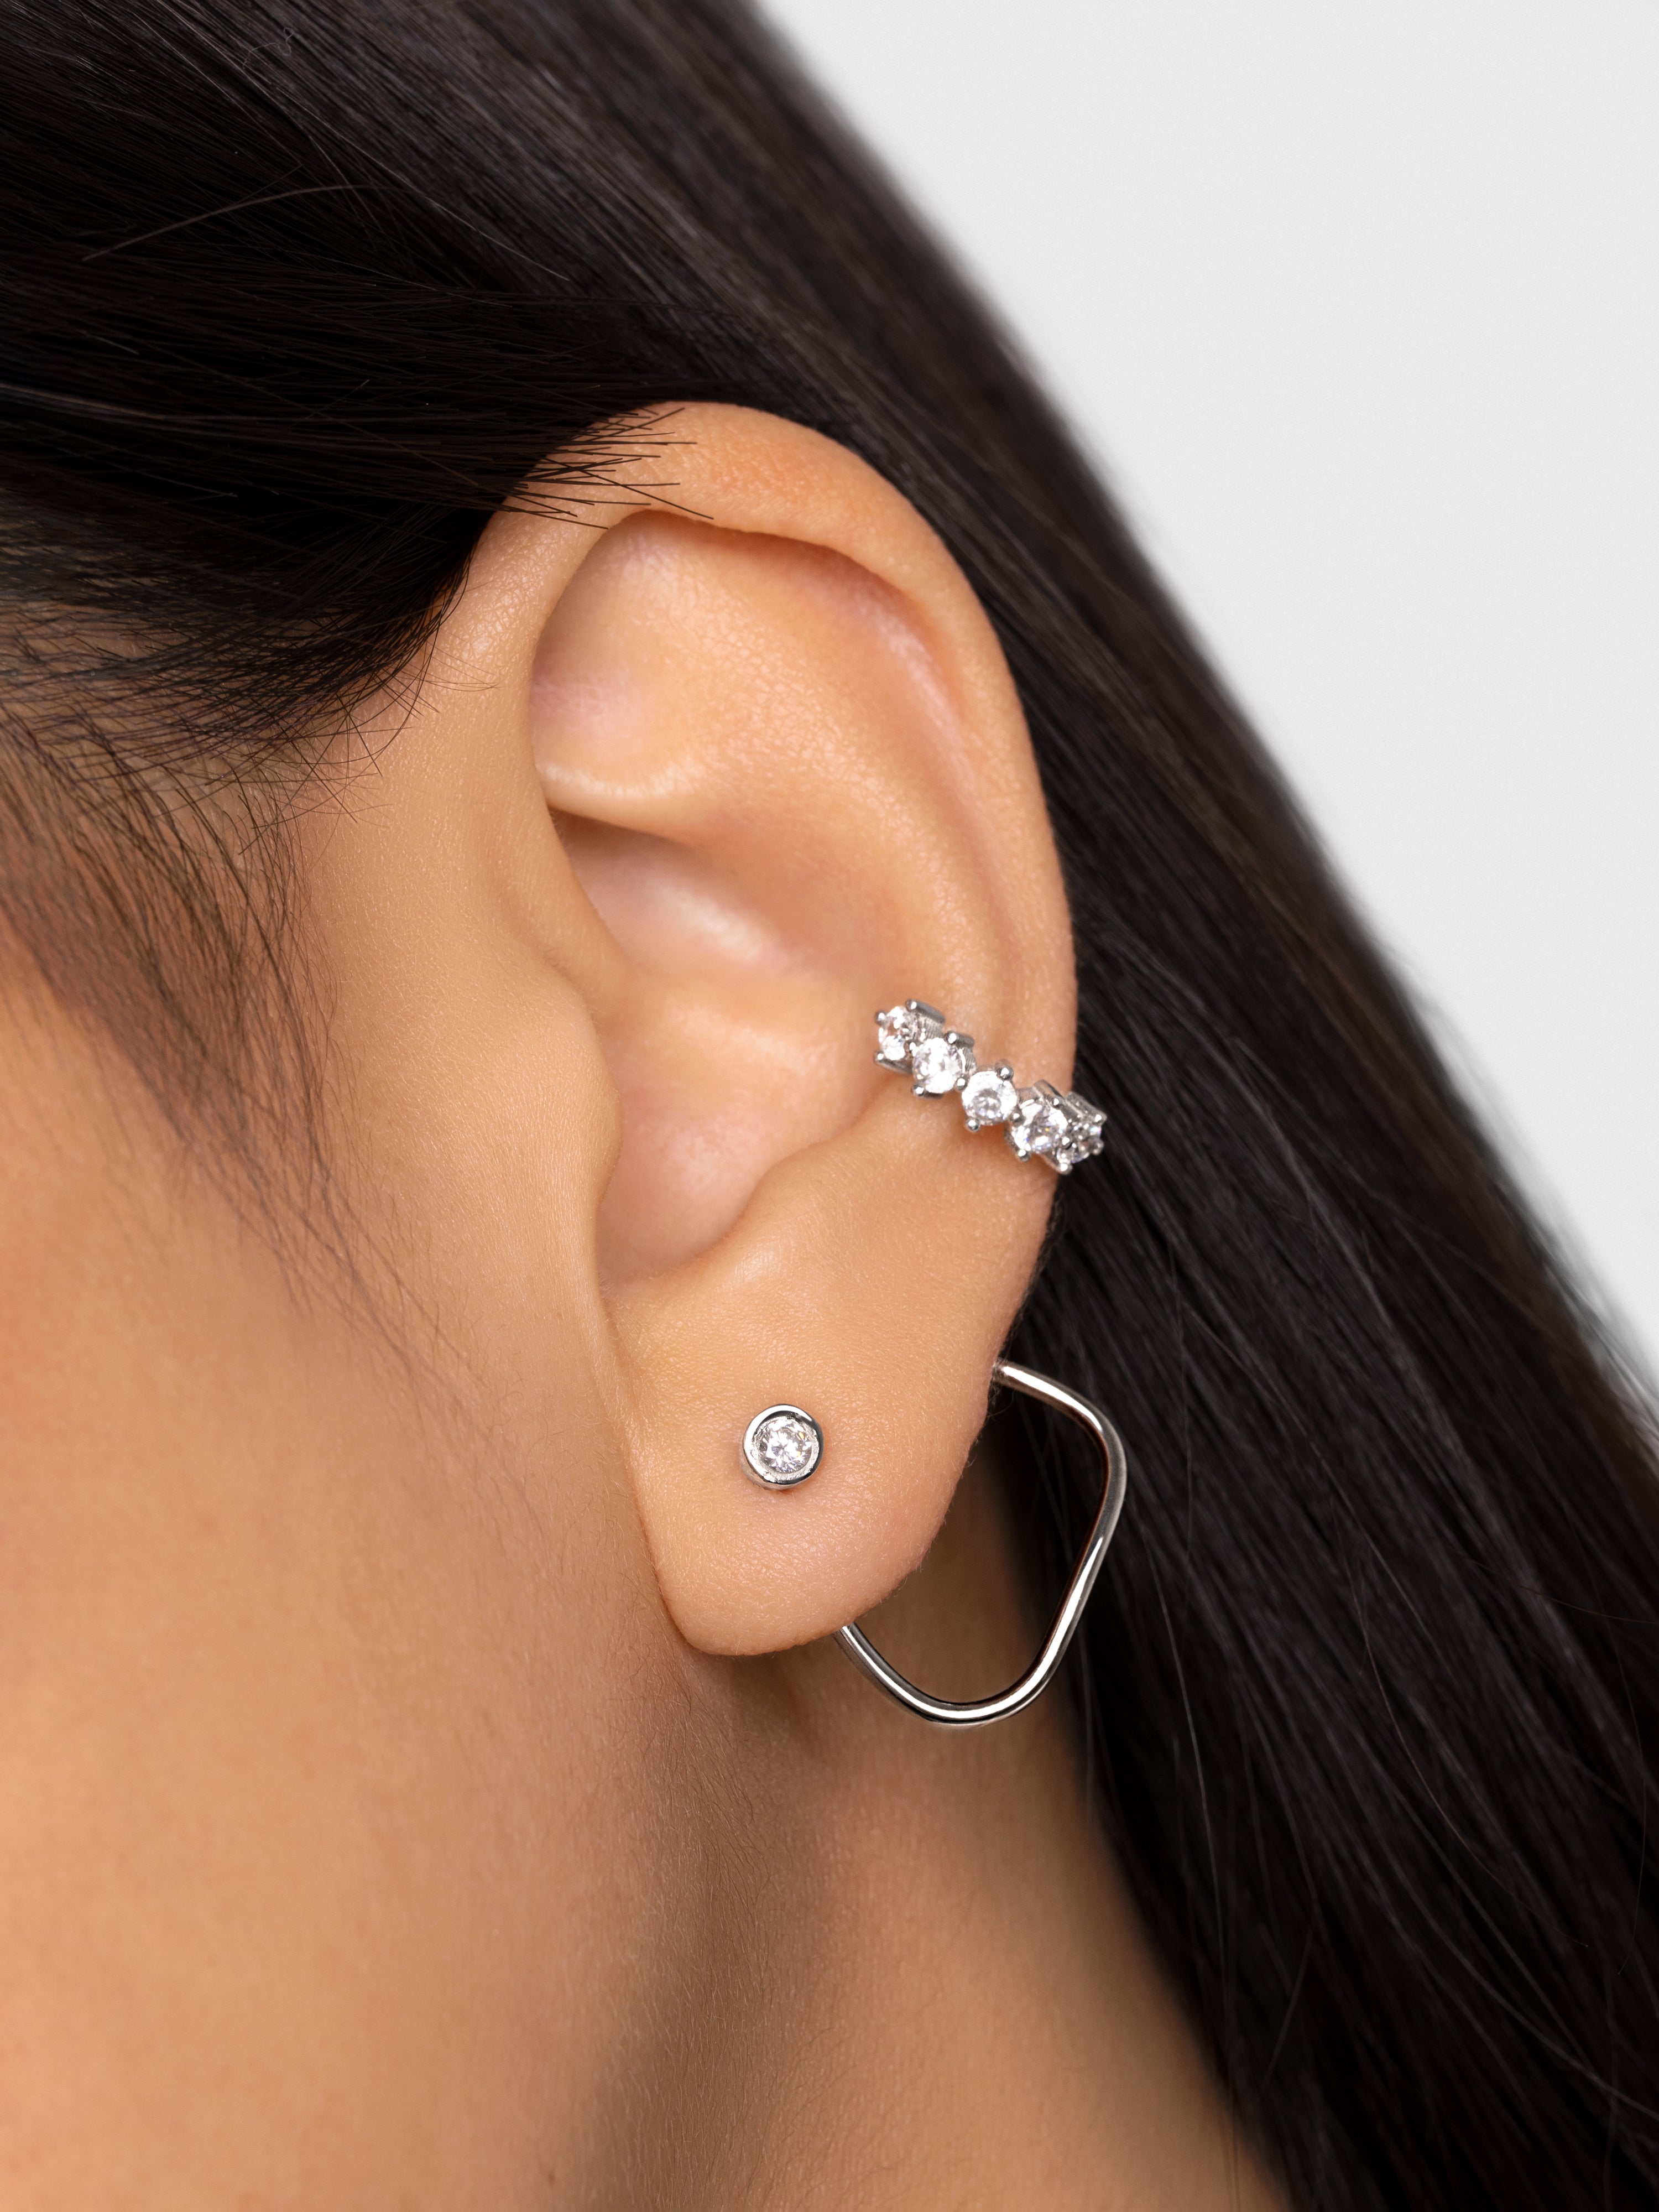 Sarah Silver Single Earring